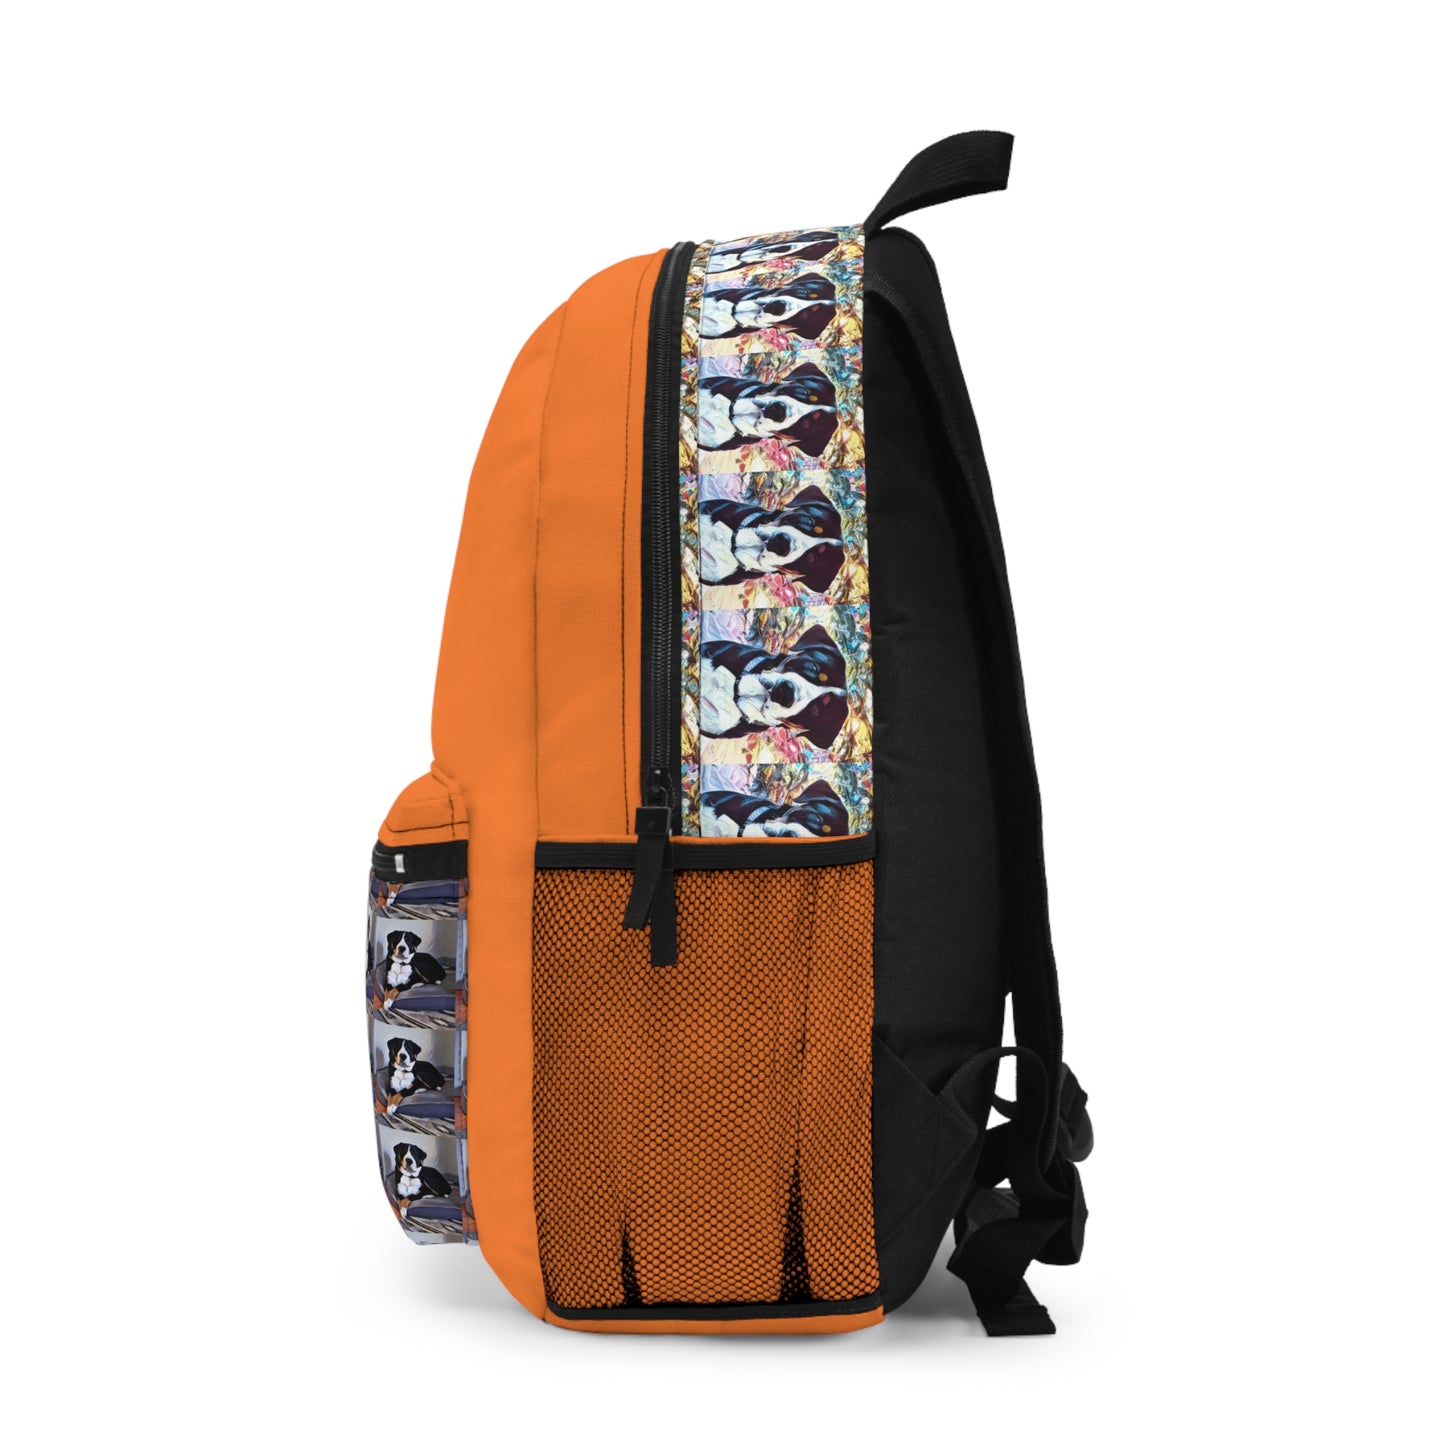 Fritz Swiss Mountain Backpack